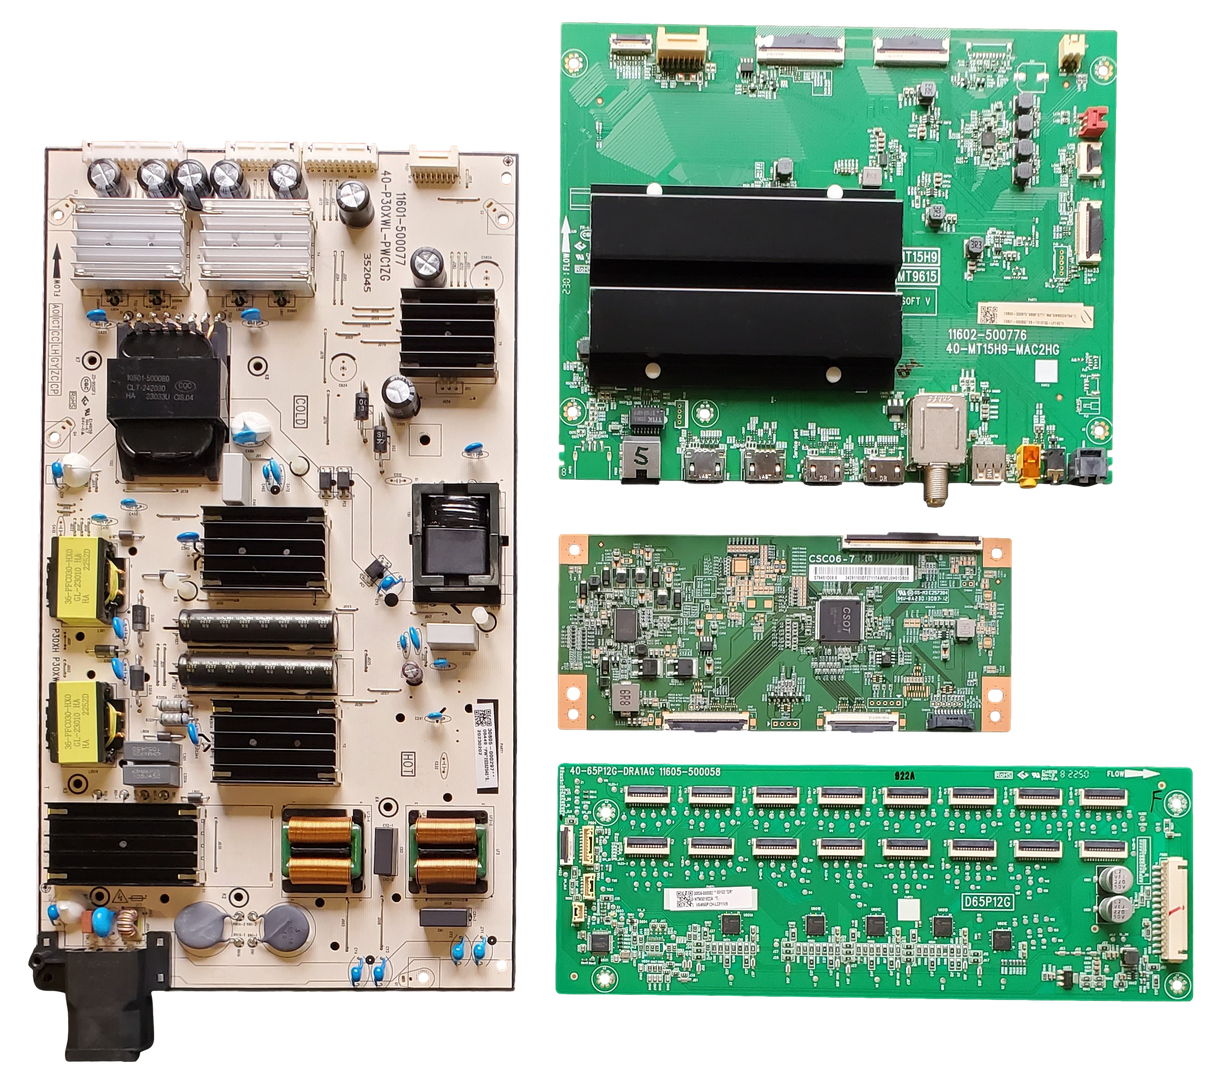 65Q750G TCL TV Repair Parts Kit, 30800-000879 Main Board, 30805-000297 Power Supply, 30805-000082 LED Driver, ST6451D08-5 T-Con, 65Q750G